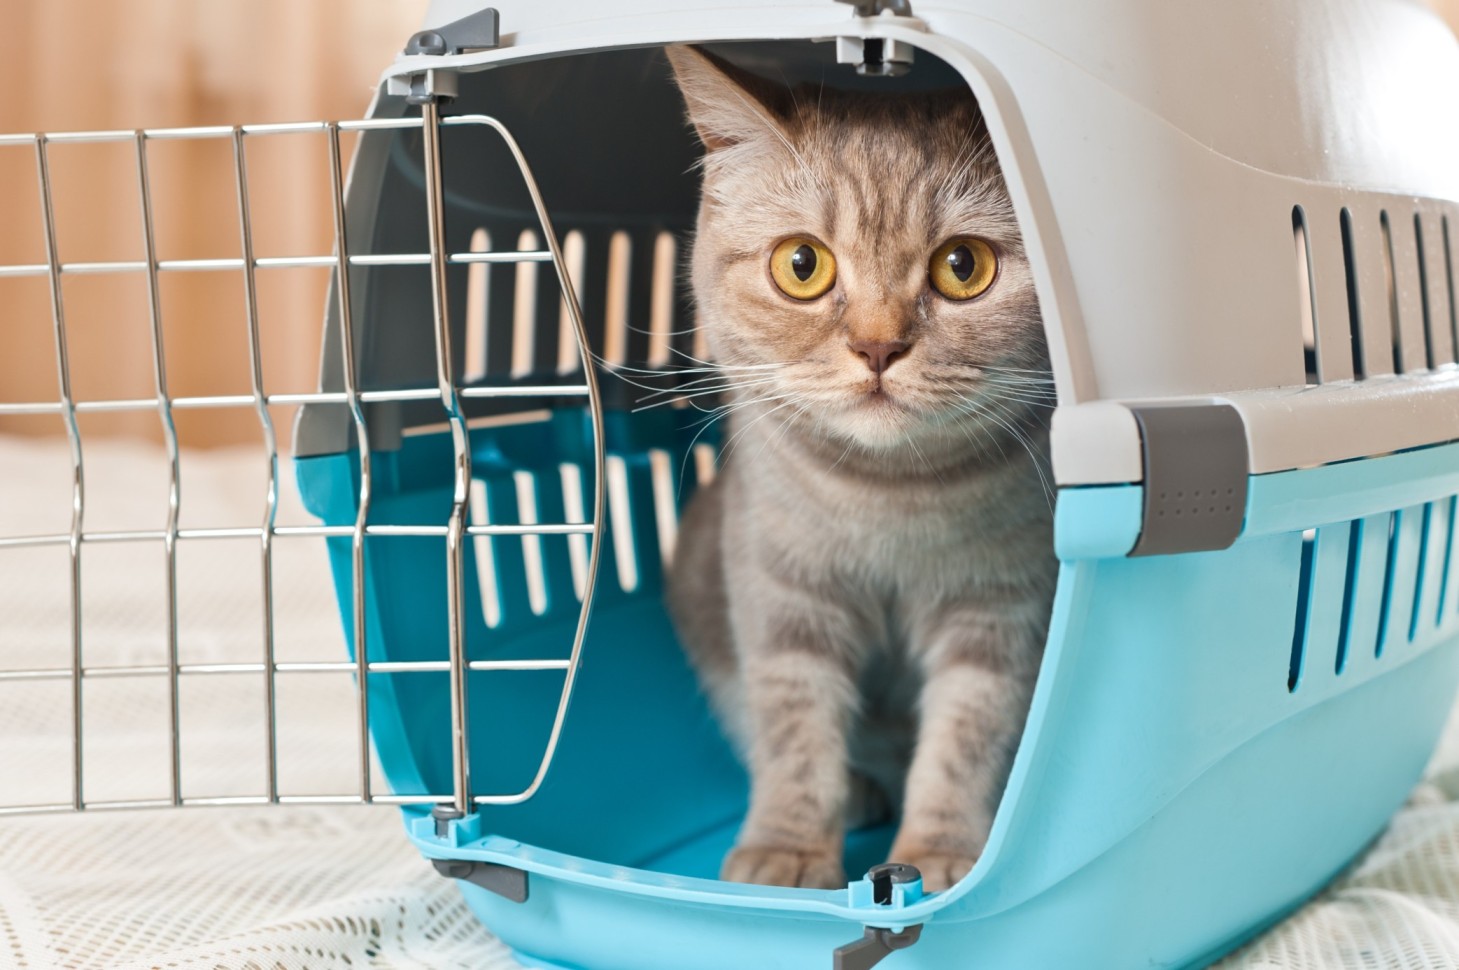 A cat sitting inside a carrier